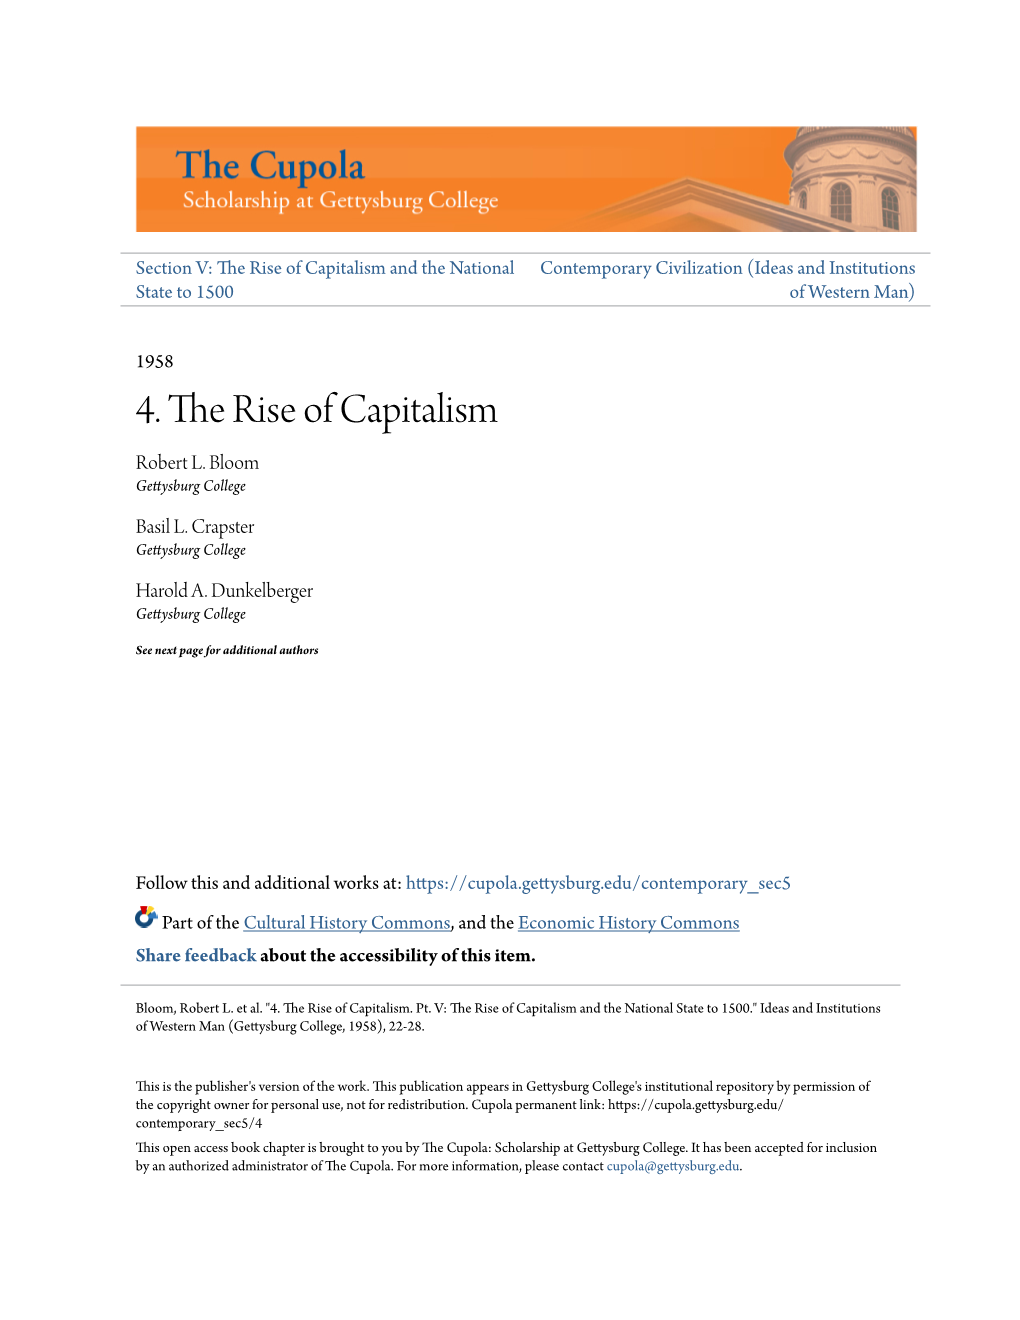 4. the Rise of Capitalism Robert L